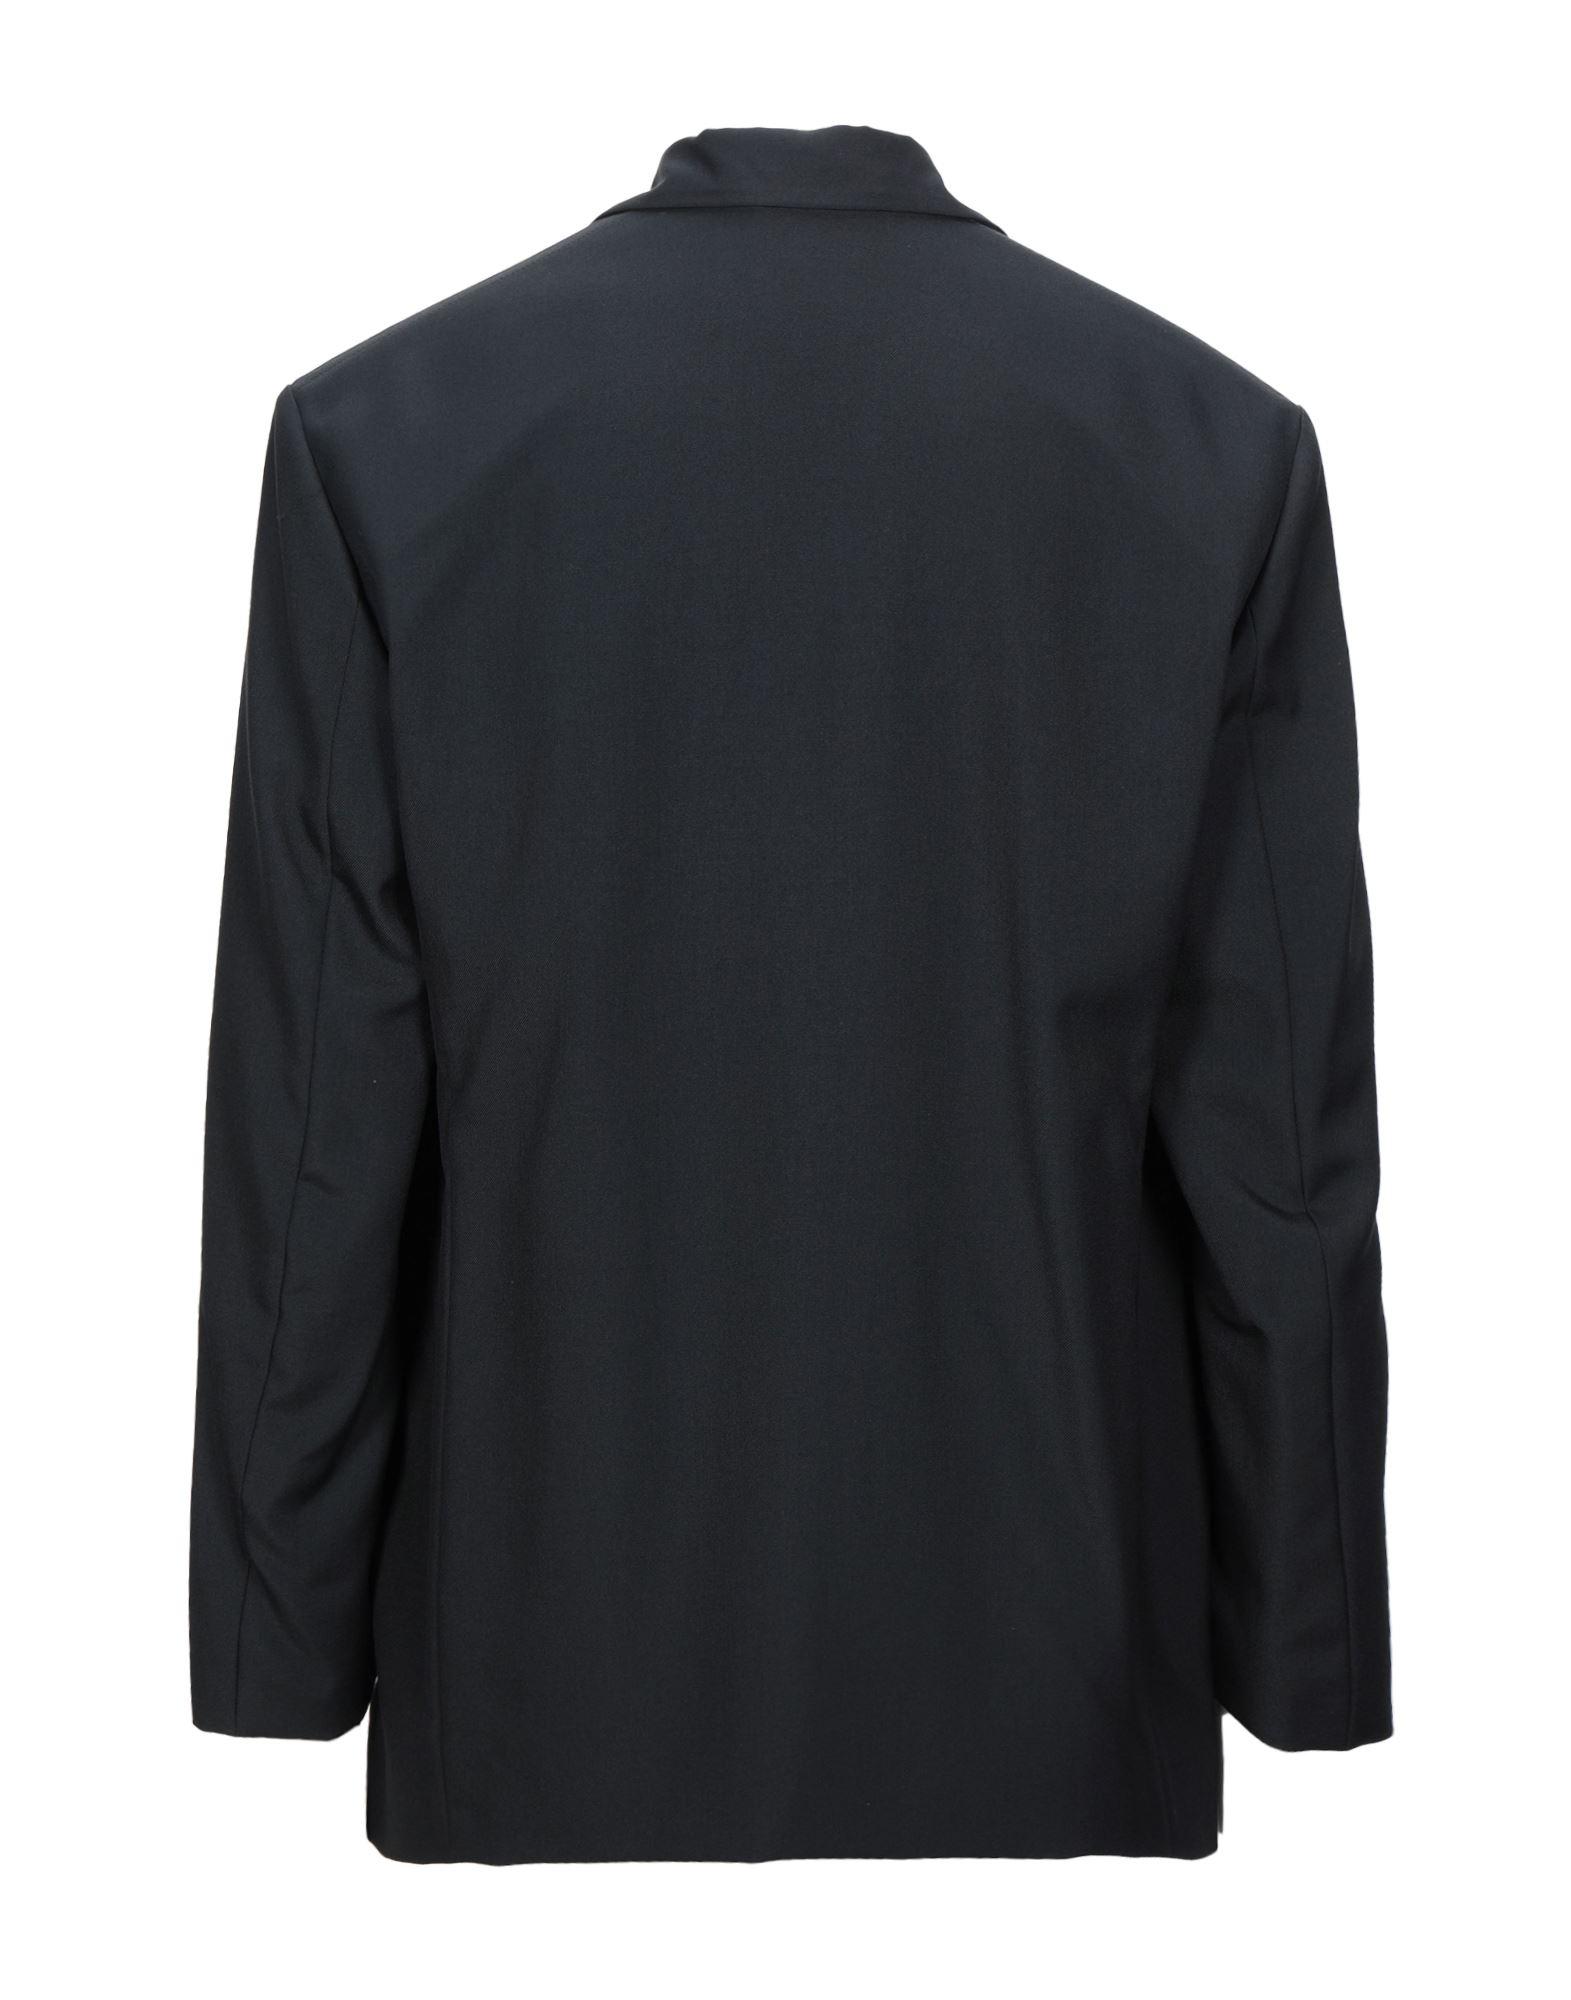 Balenciaga Wool Suit Jacket in Black for Men - Lyst